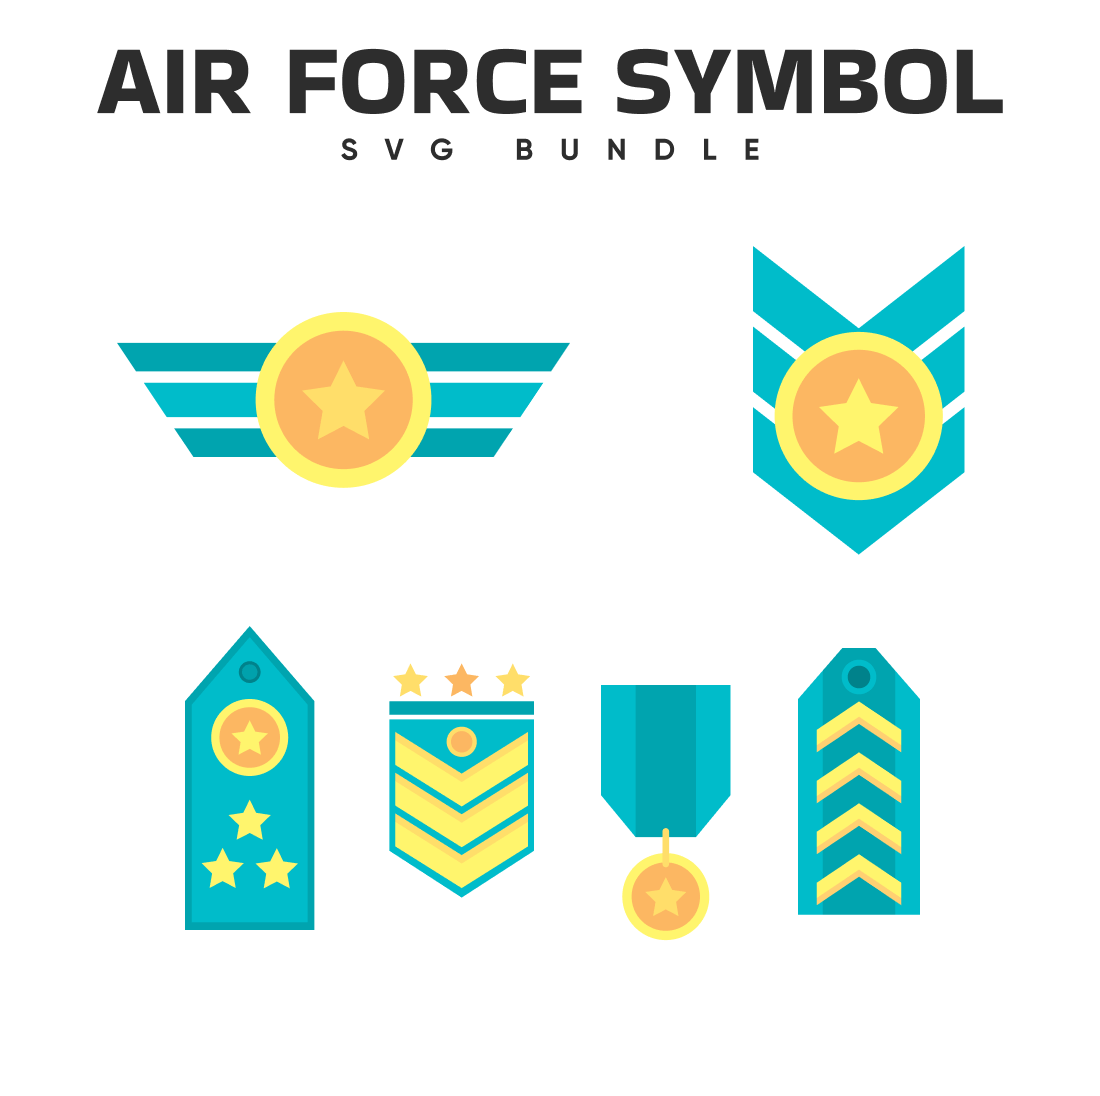 Air force symbol SVG Bundle.